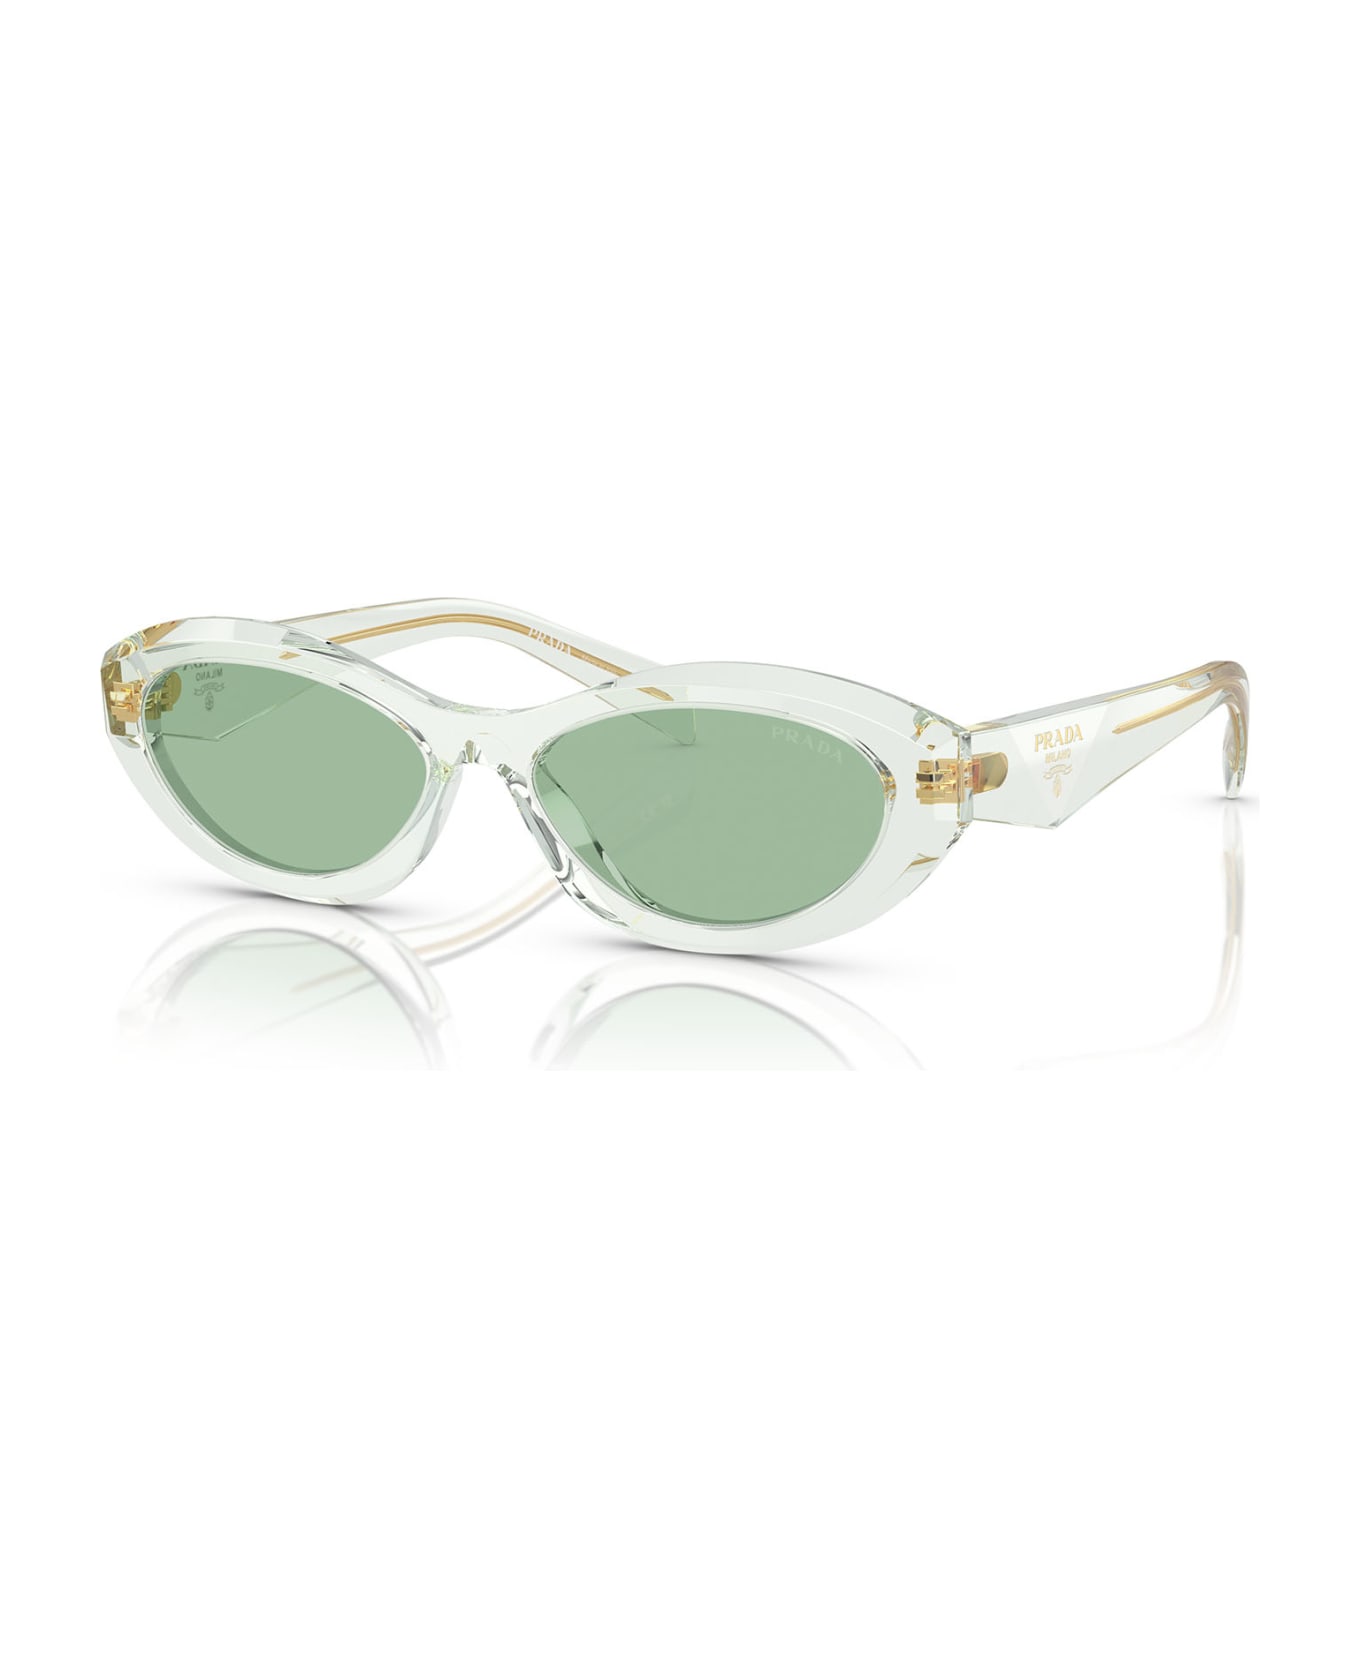 Prada Eyewear Pr 26zs Transparent Mint Sunglasses - Transparent Mint